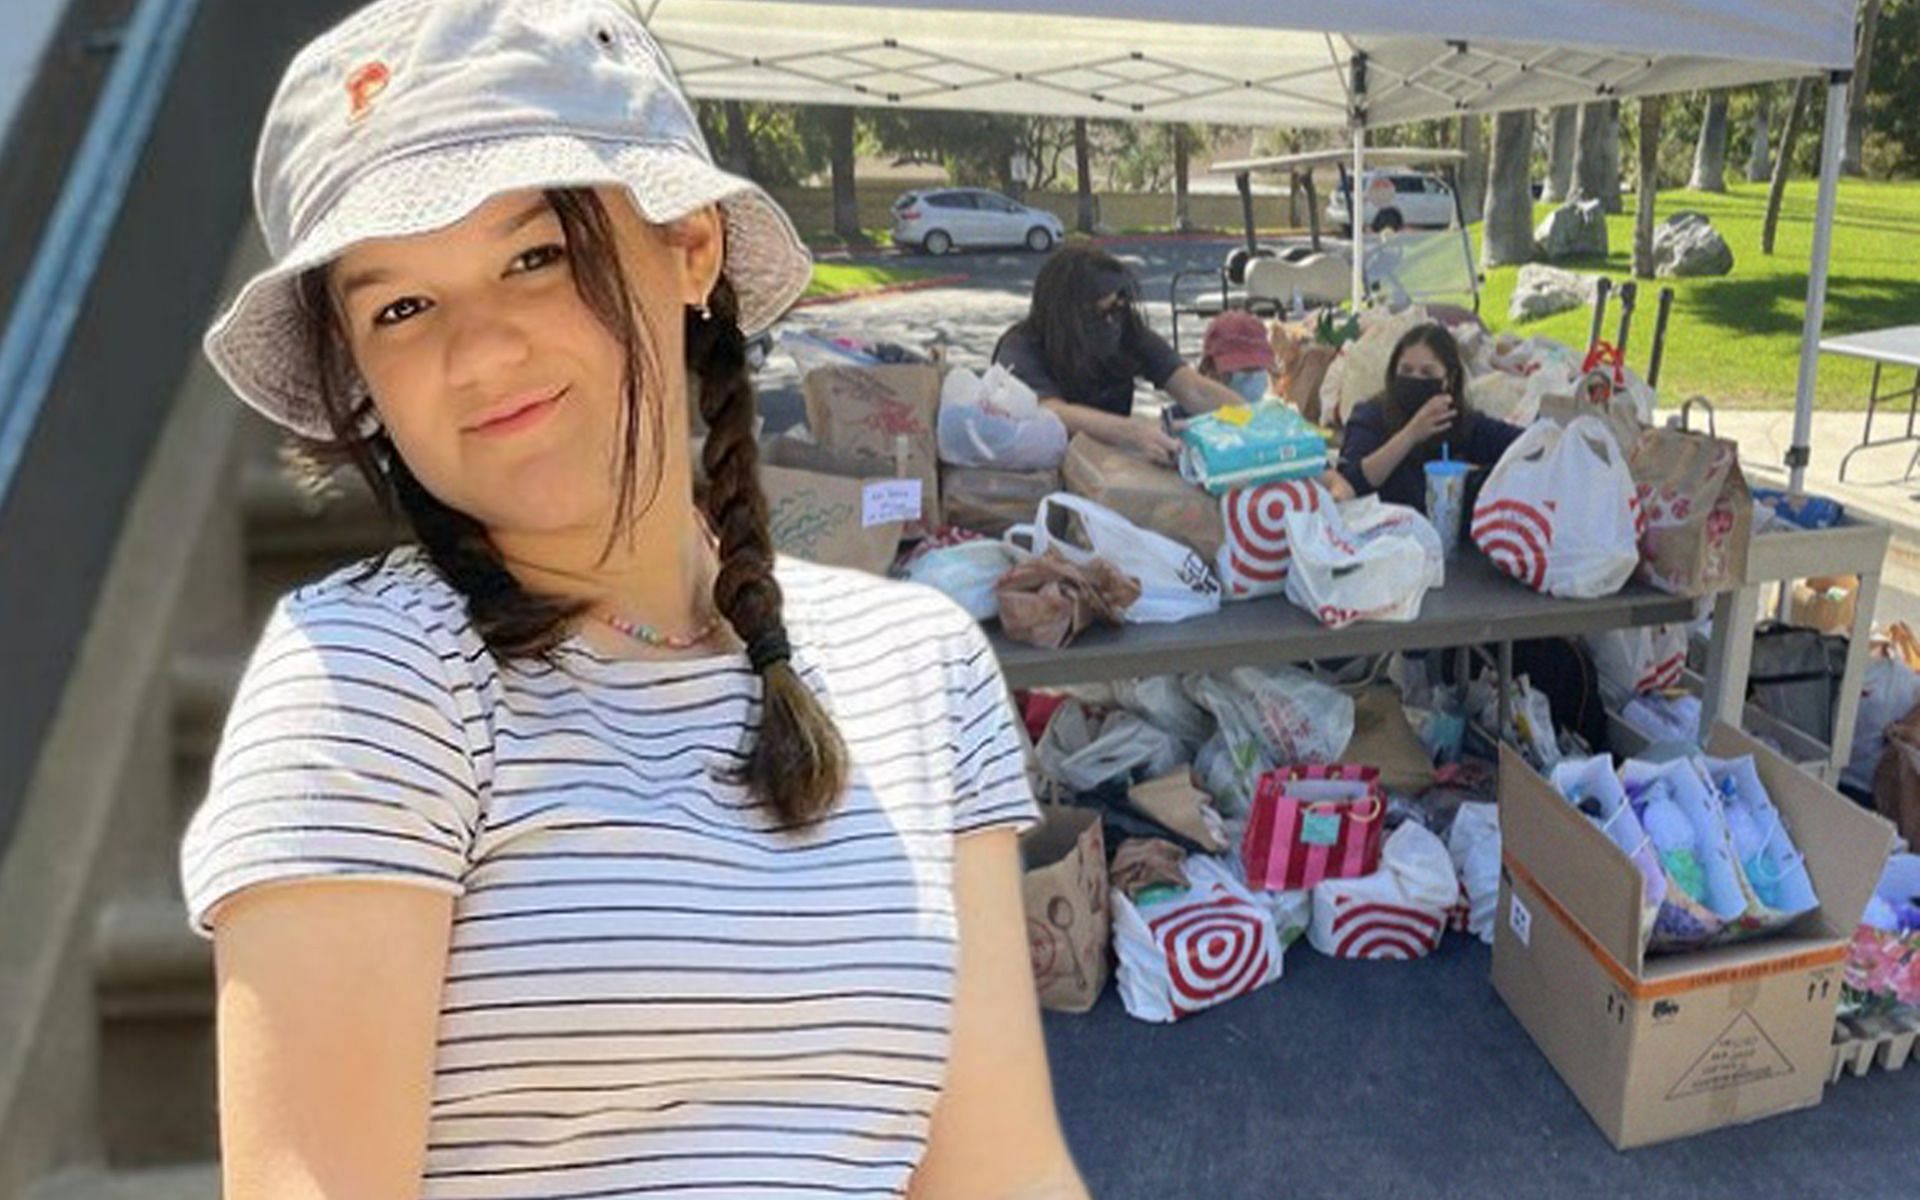 Actress Dariana Alvarez discussed her volunteer work in eradicating period poverty (Image via itsdarianaalvarez/Instagram and Dariana Alvarez)